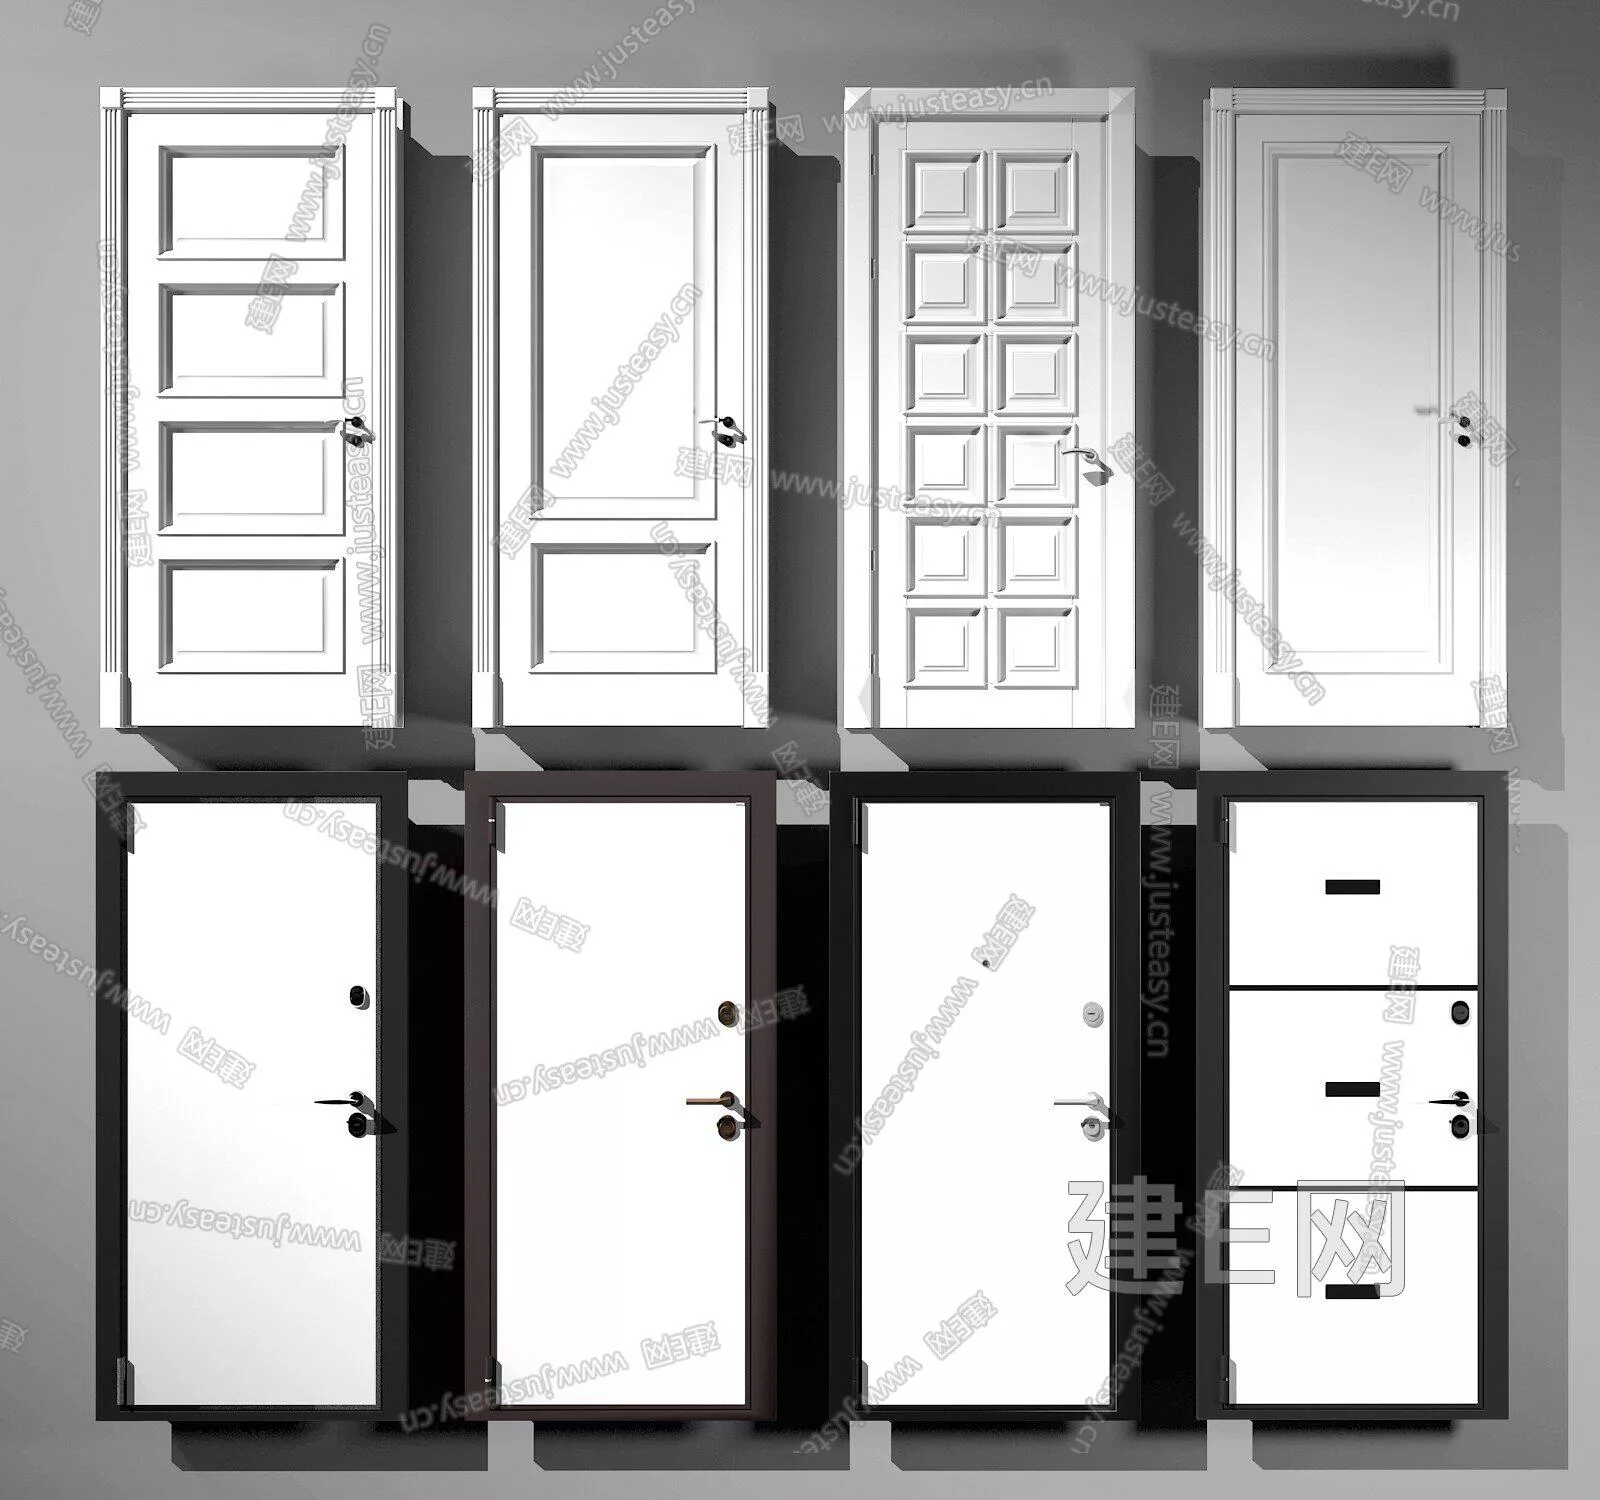 MODERN DOOR AND WINDOWS - SKETCHUP 3D MODEL - ENSCAPE - 111562164